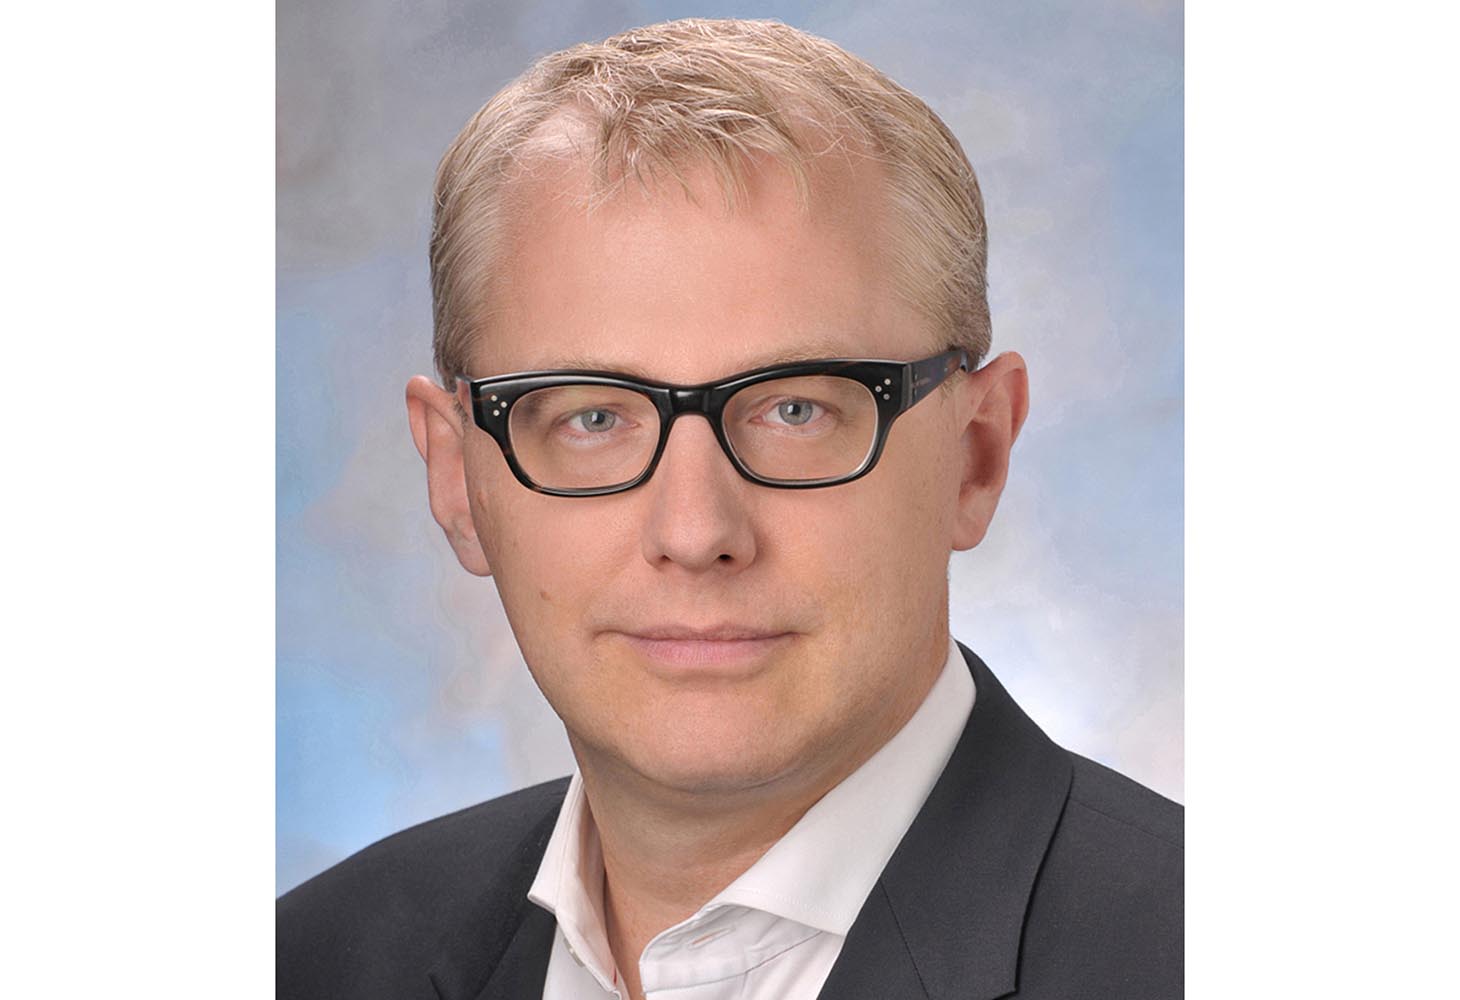 Matthias Dohrn to head BASF’s Global Procurement division